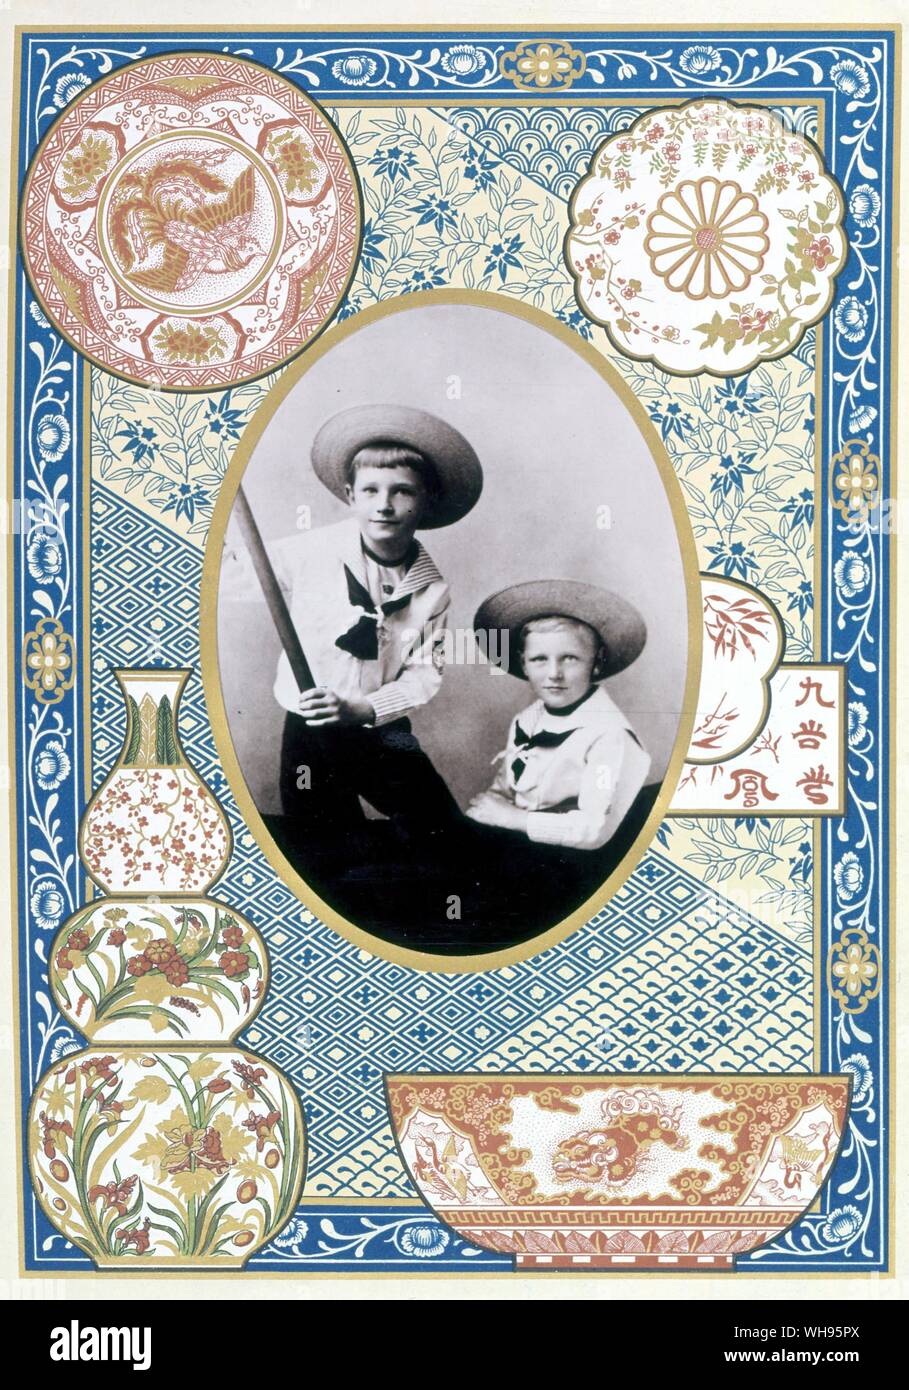 Art subjects: Ephemera/ two young boys/early 20th century? Stock Photo